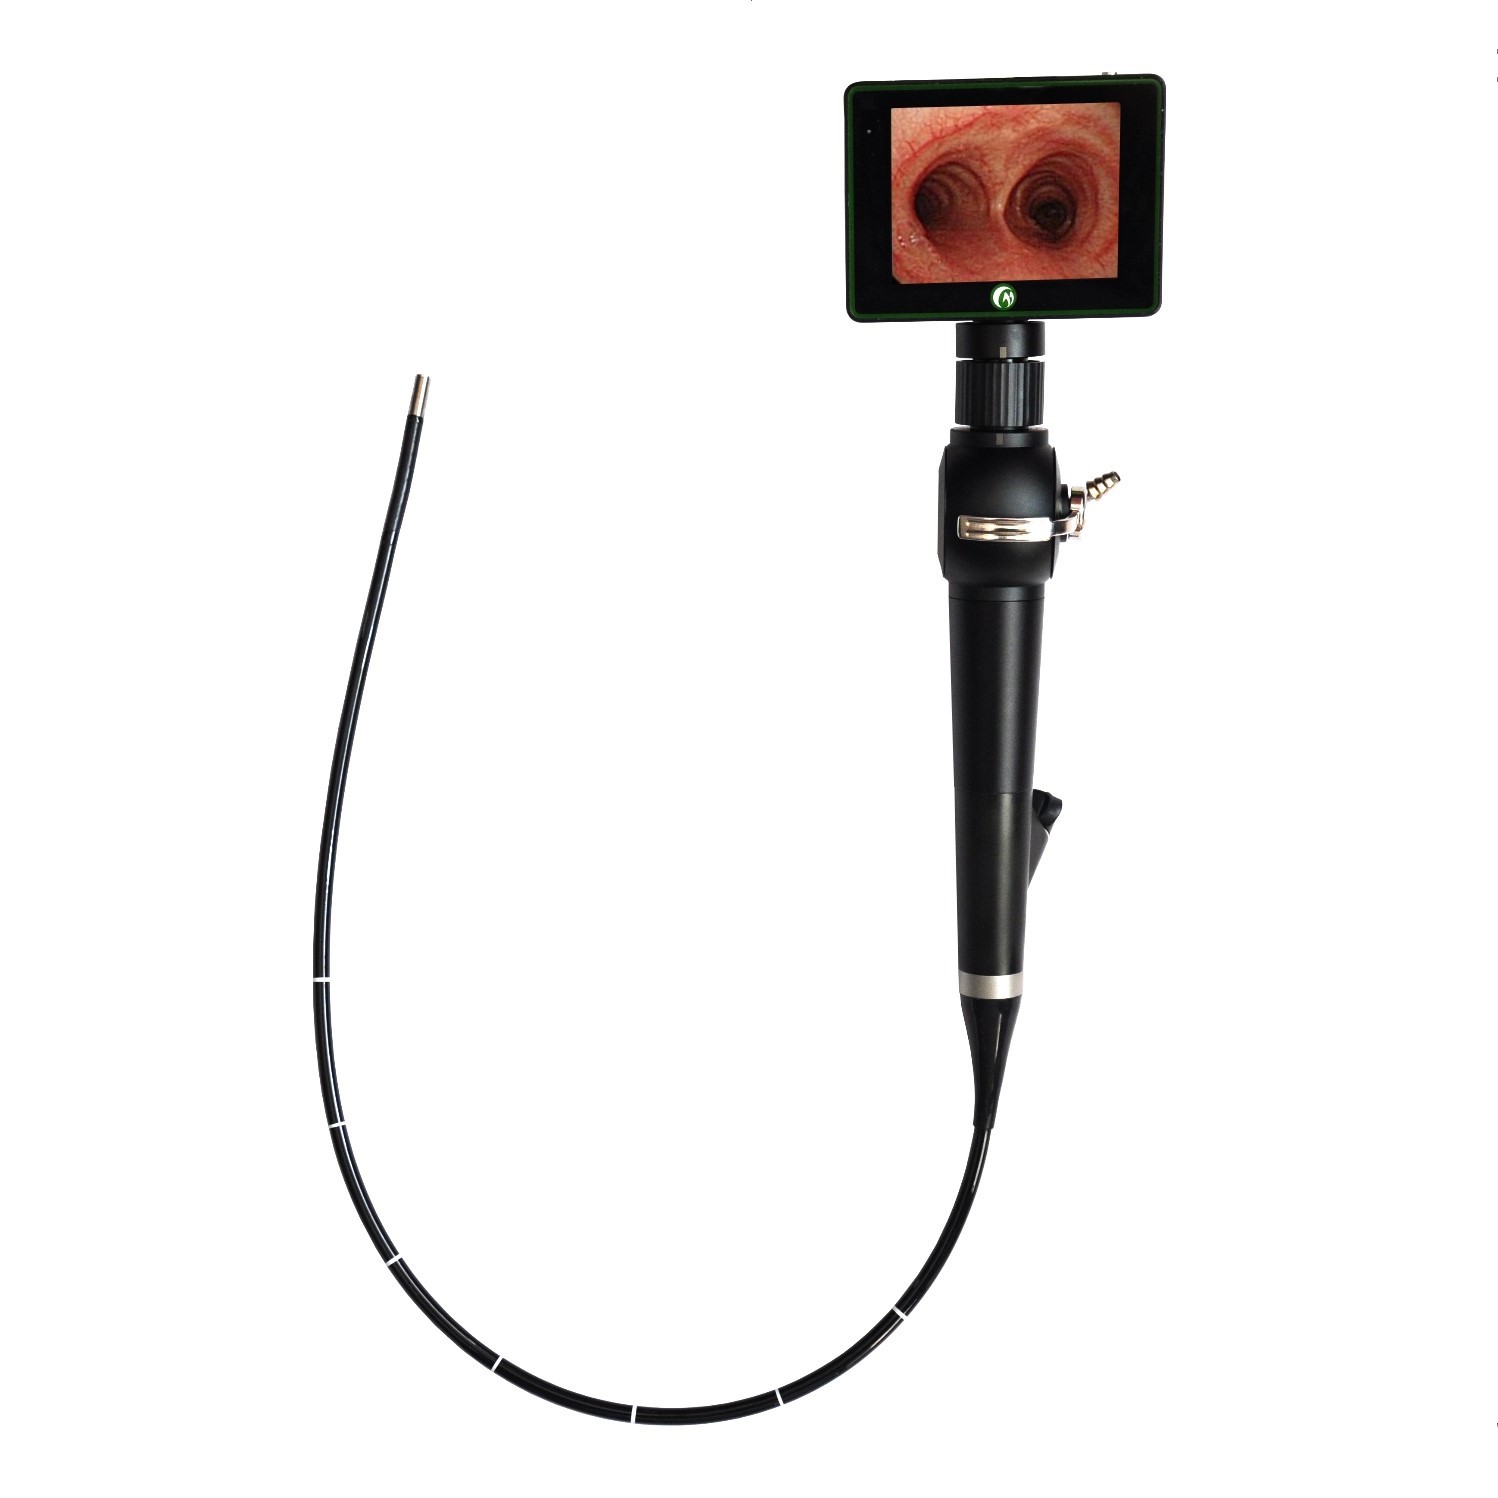 Portable Video Laryngoscope/Endoscopy For Hospital